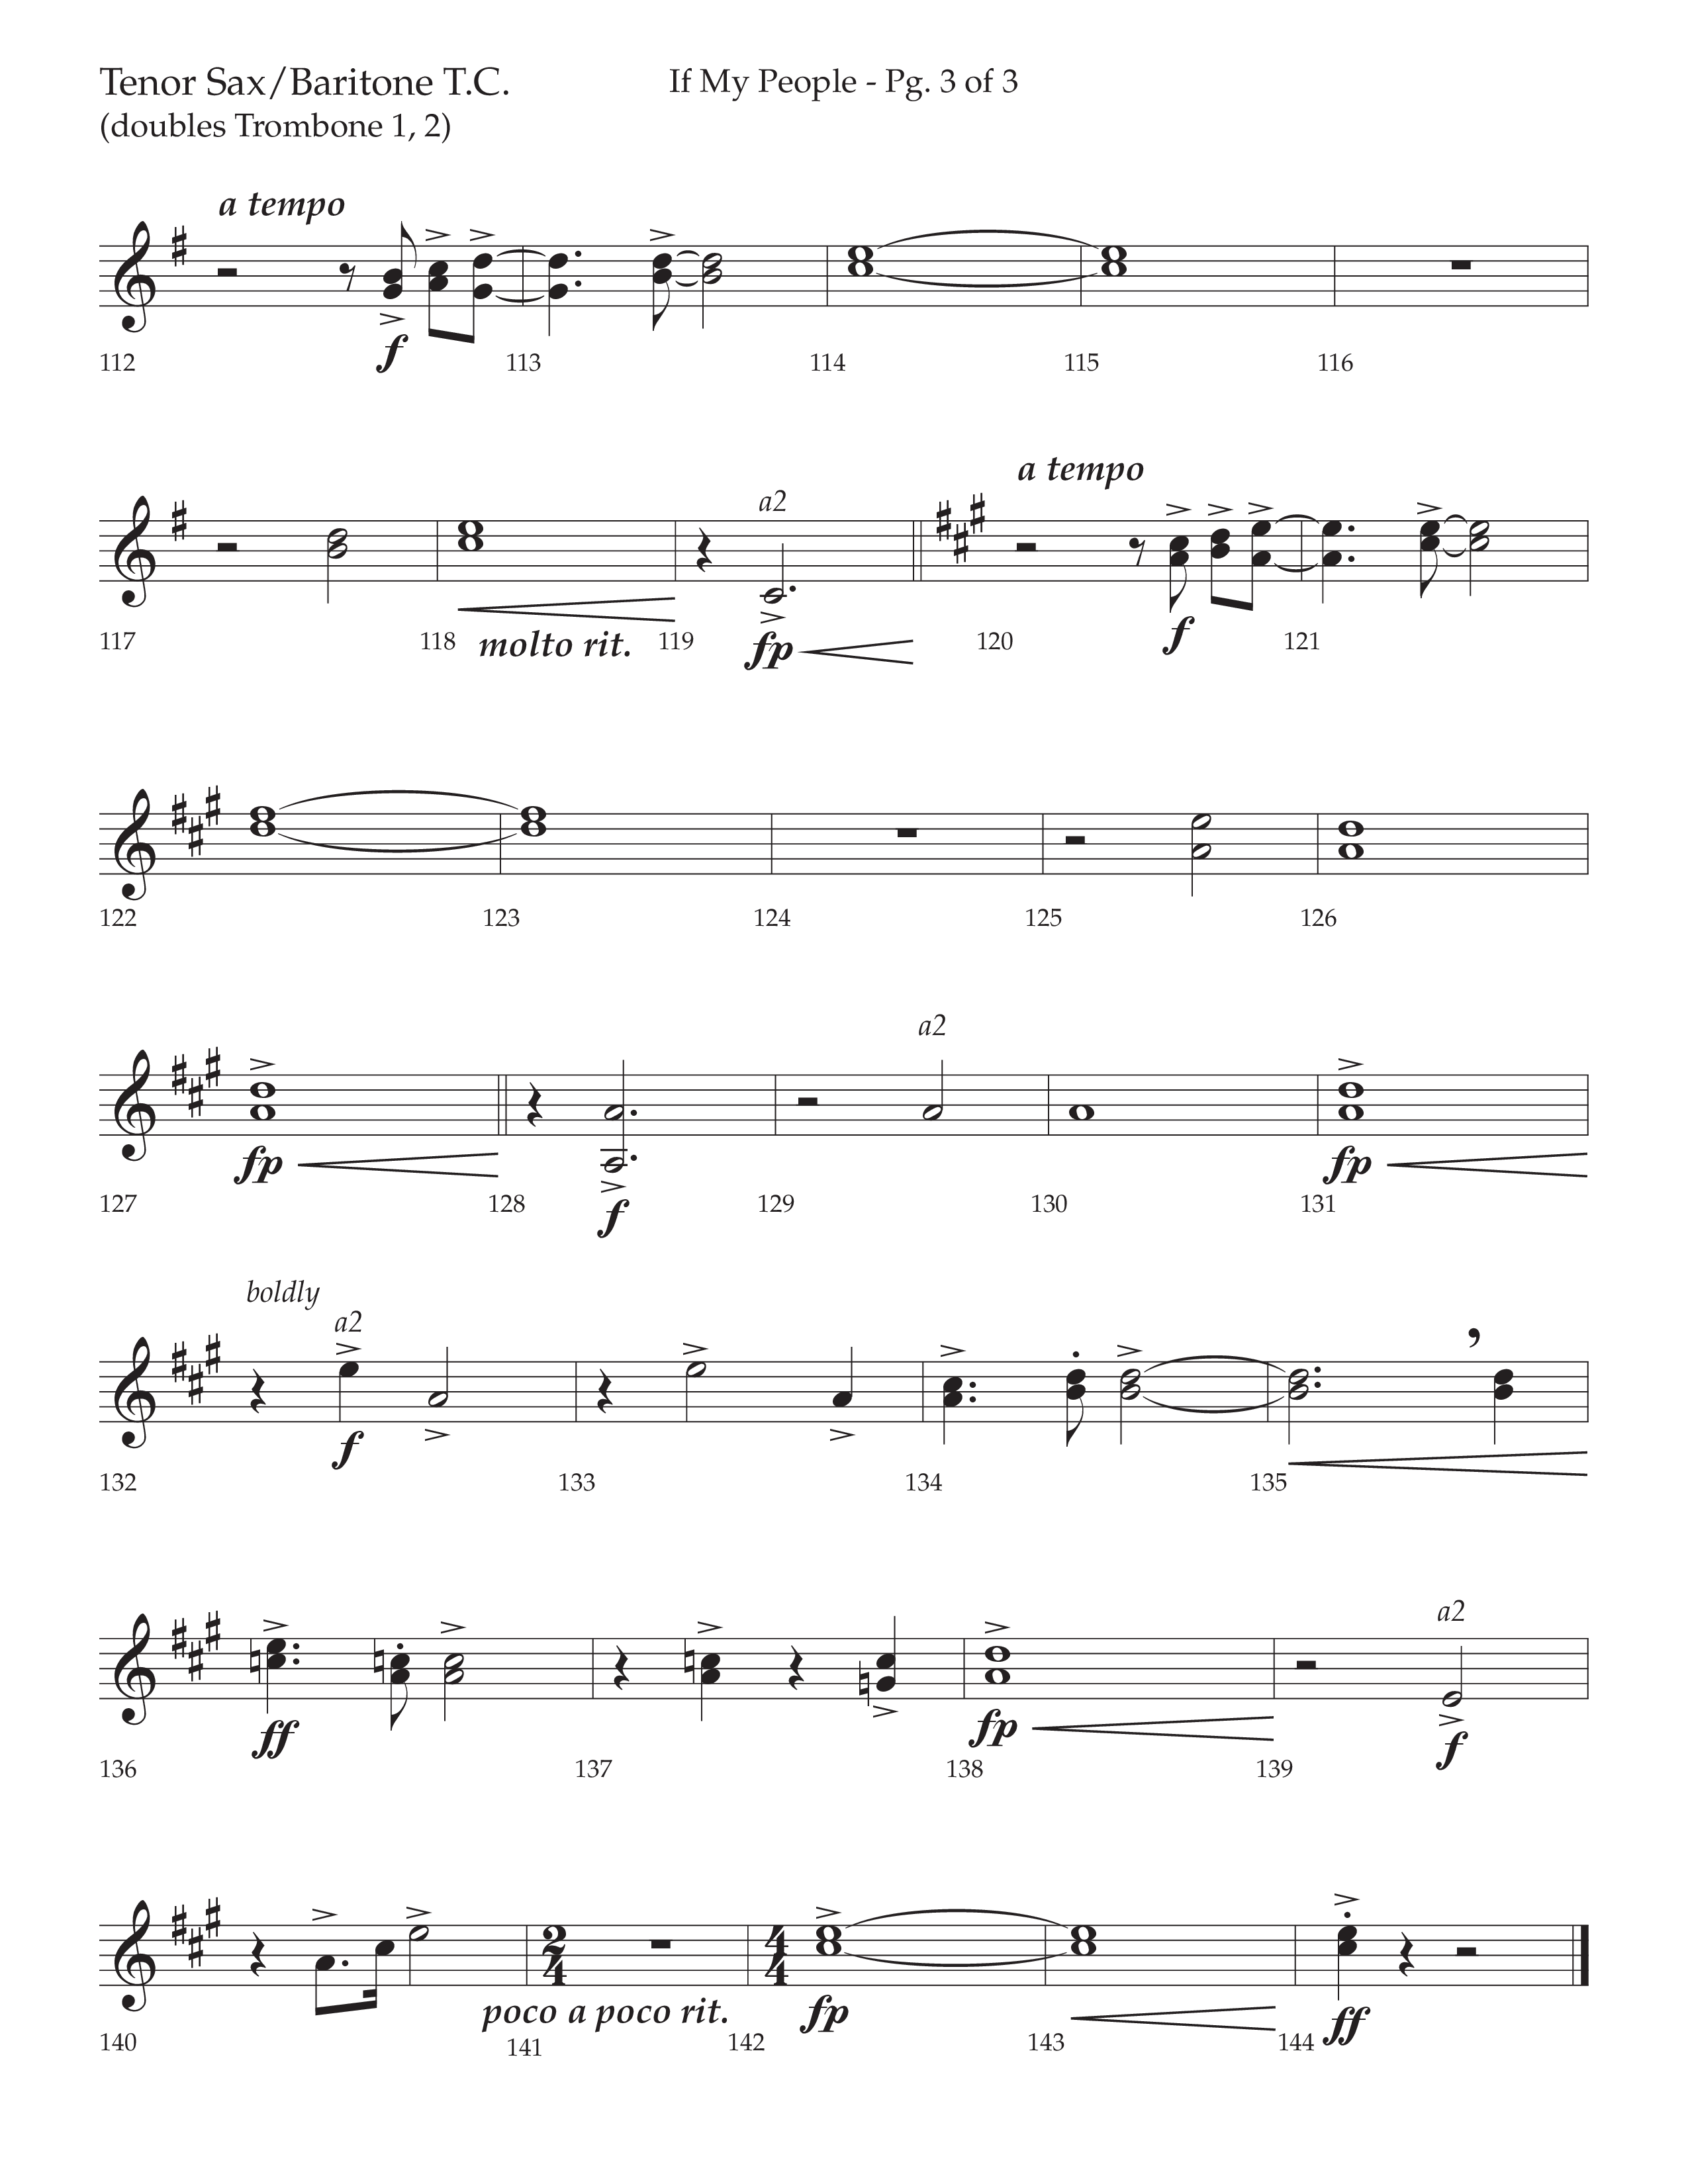 If My People (Choral Anthem SATB) Tenor Sax/Baritone T.C. (Lifeway Choral / Arr. David Wise / Orch. David Shipps)